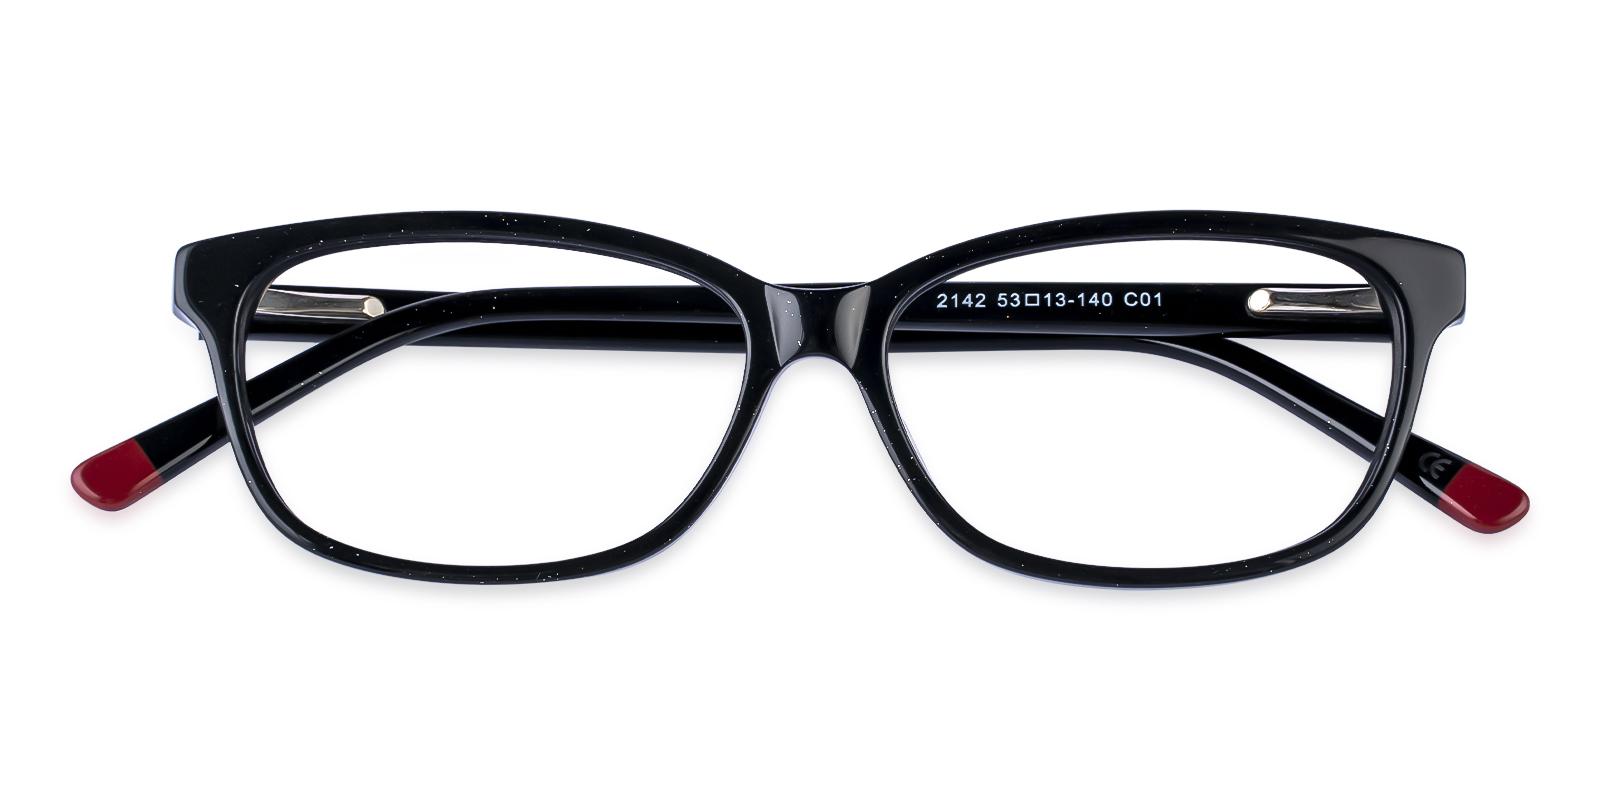 Cyprus Black Acetate Eyeglasses , SpringHinges , UniversalBridgeFit Frames from ABBE Glasses